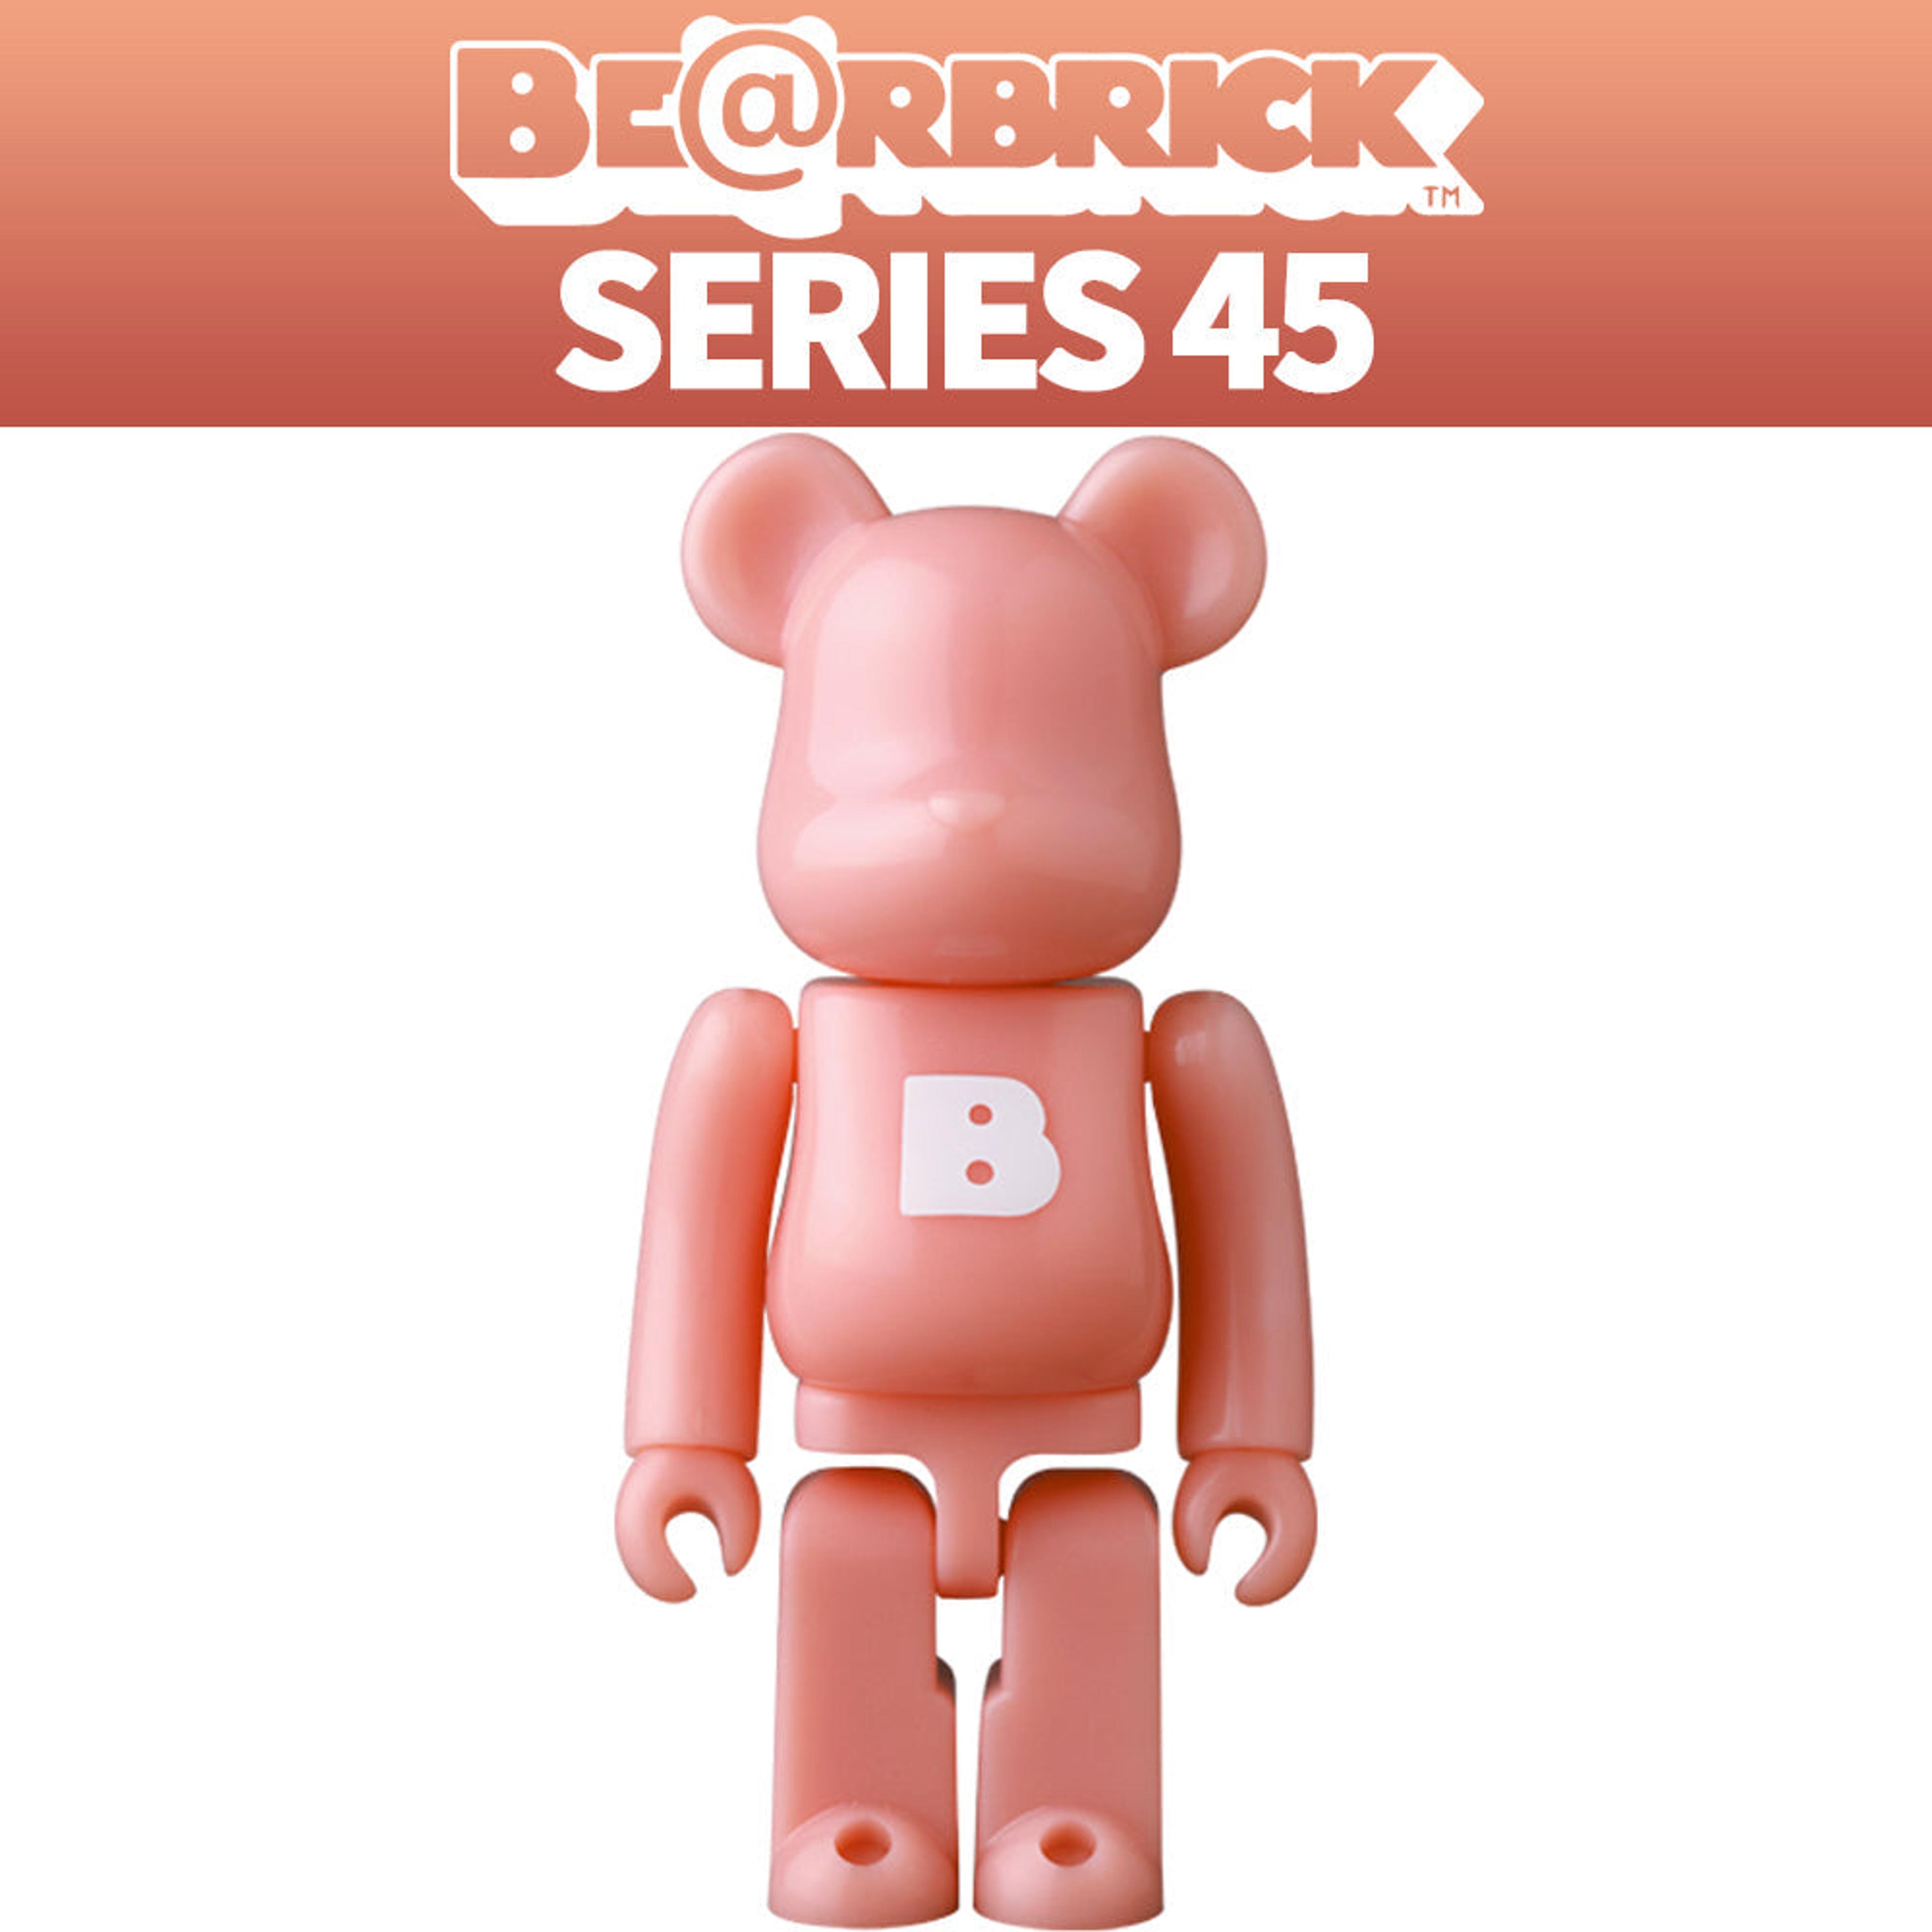 Alternate View 1 of Bearbrick Series 45 Blind Box by Medicom Toy